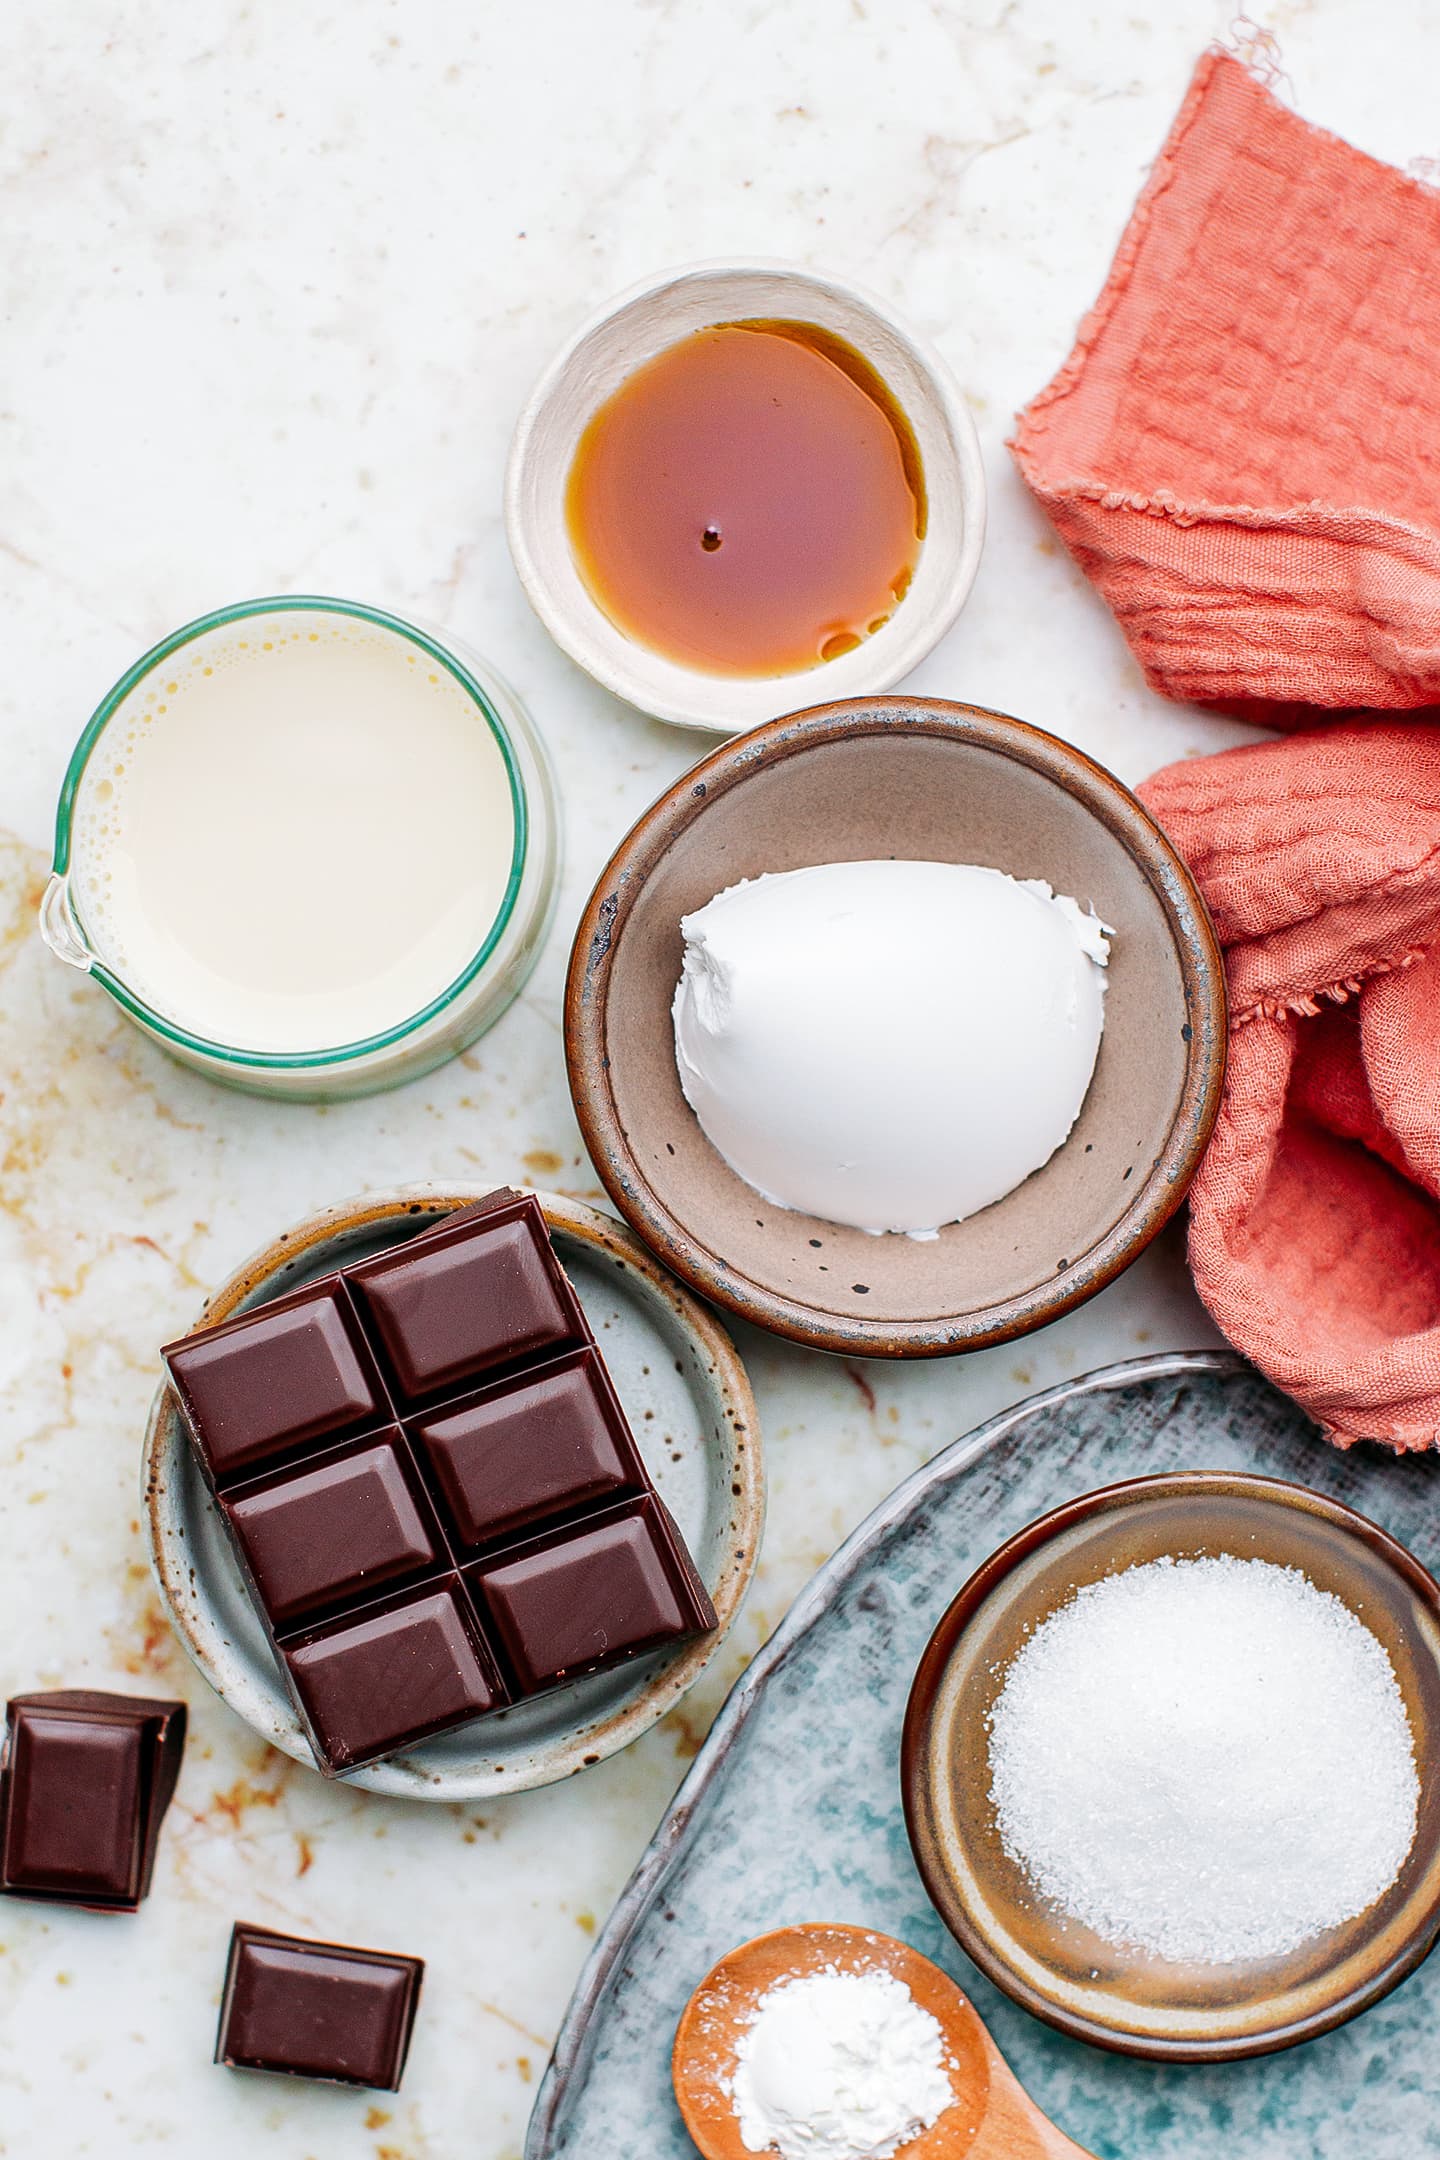 Ingredients like dark chocolate, coconut cream, sugar, and almond milk.